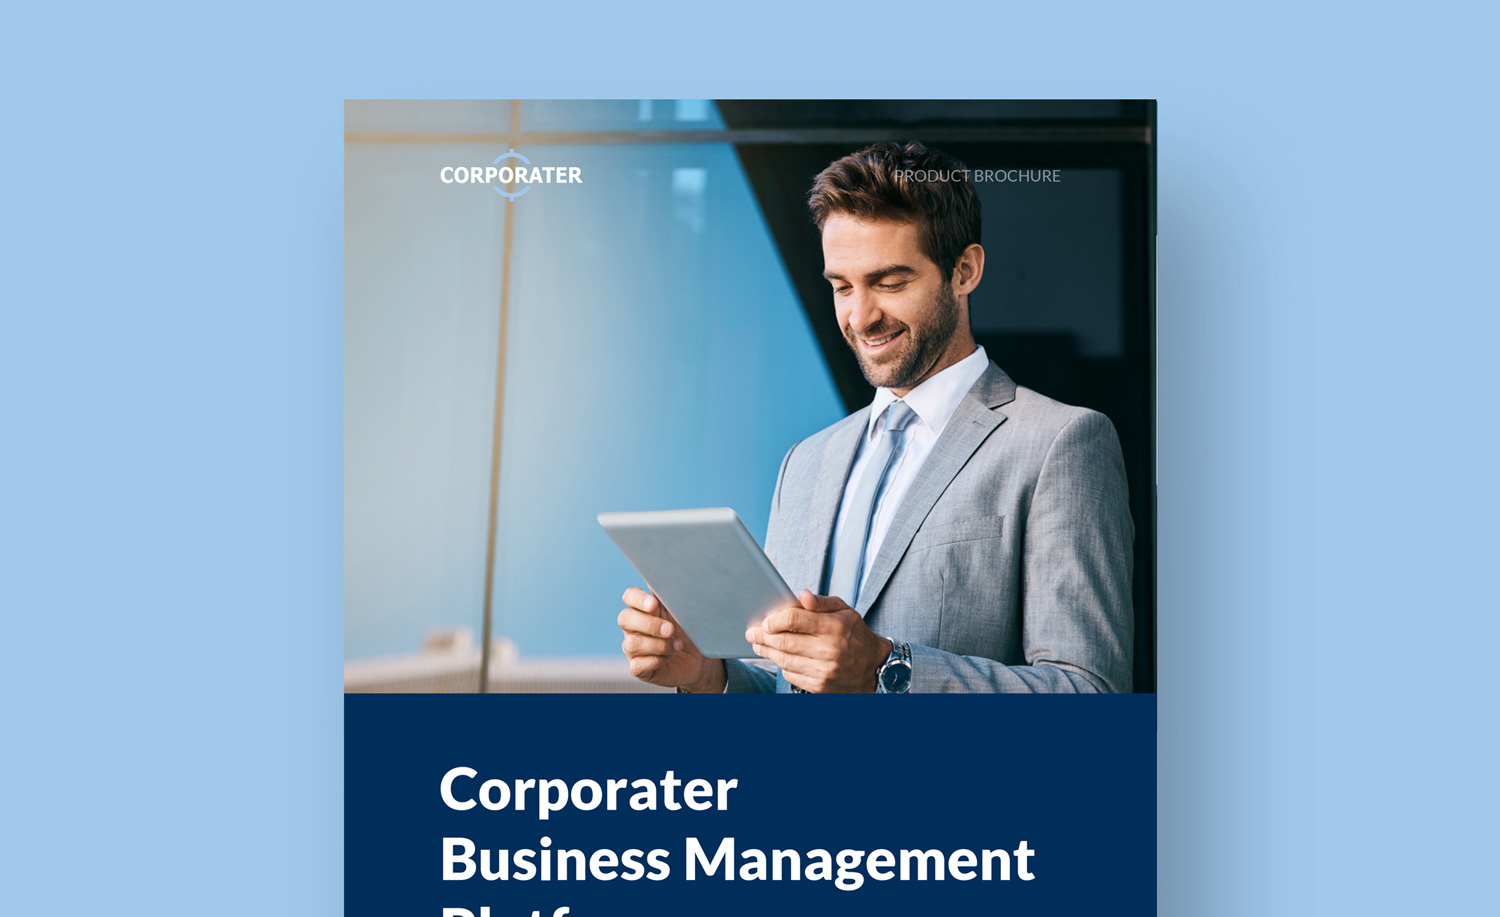 Corporater_Business-Management-Platform